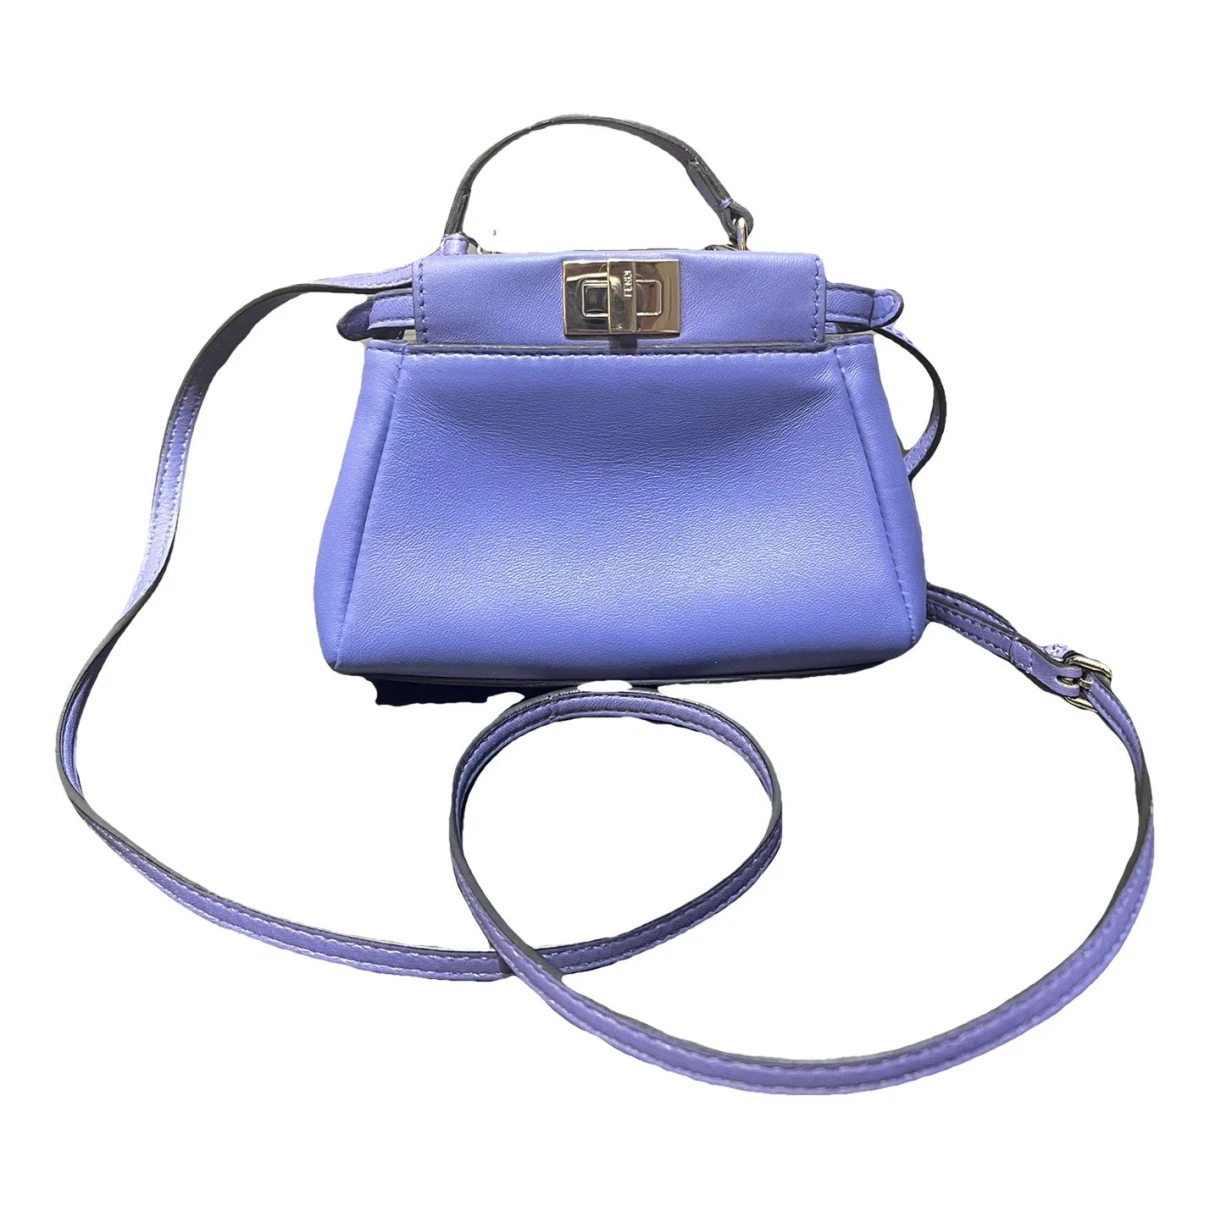 Pre-owned Fendi Peekaboo Leather Handbag In Purple